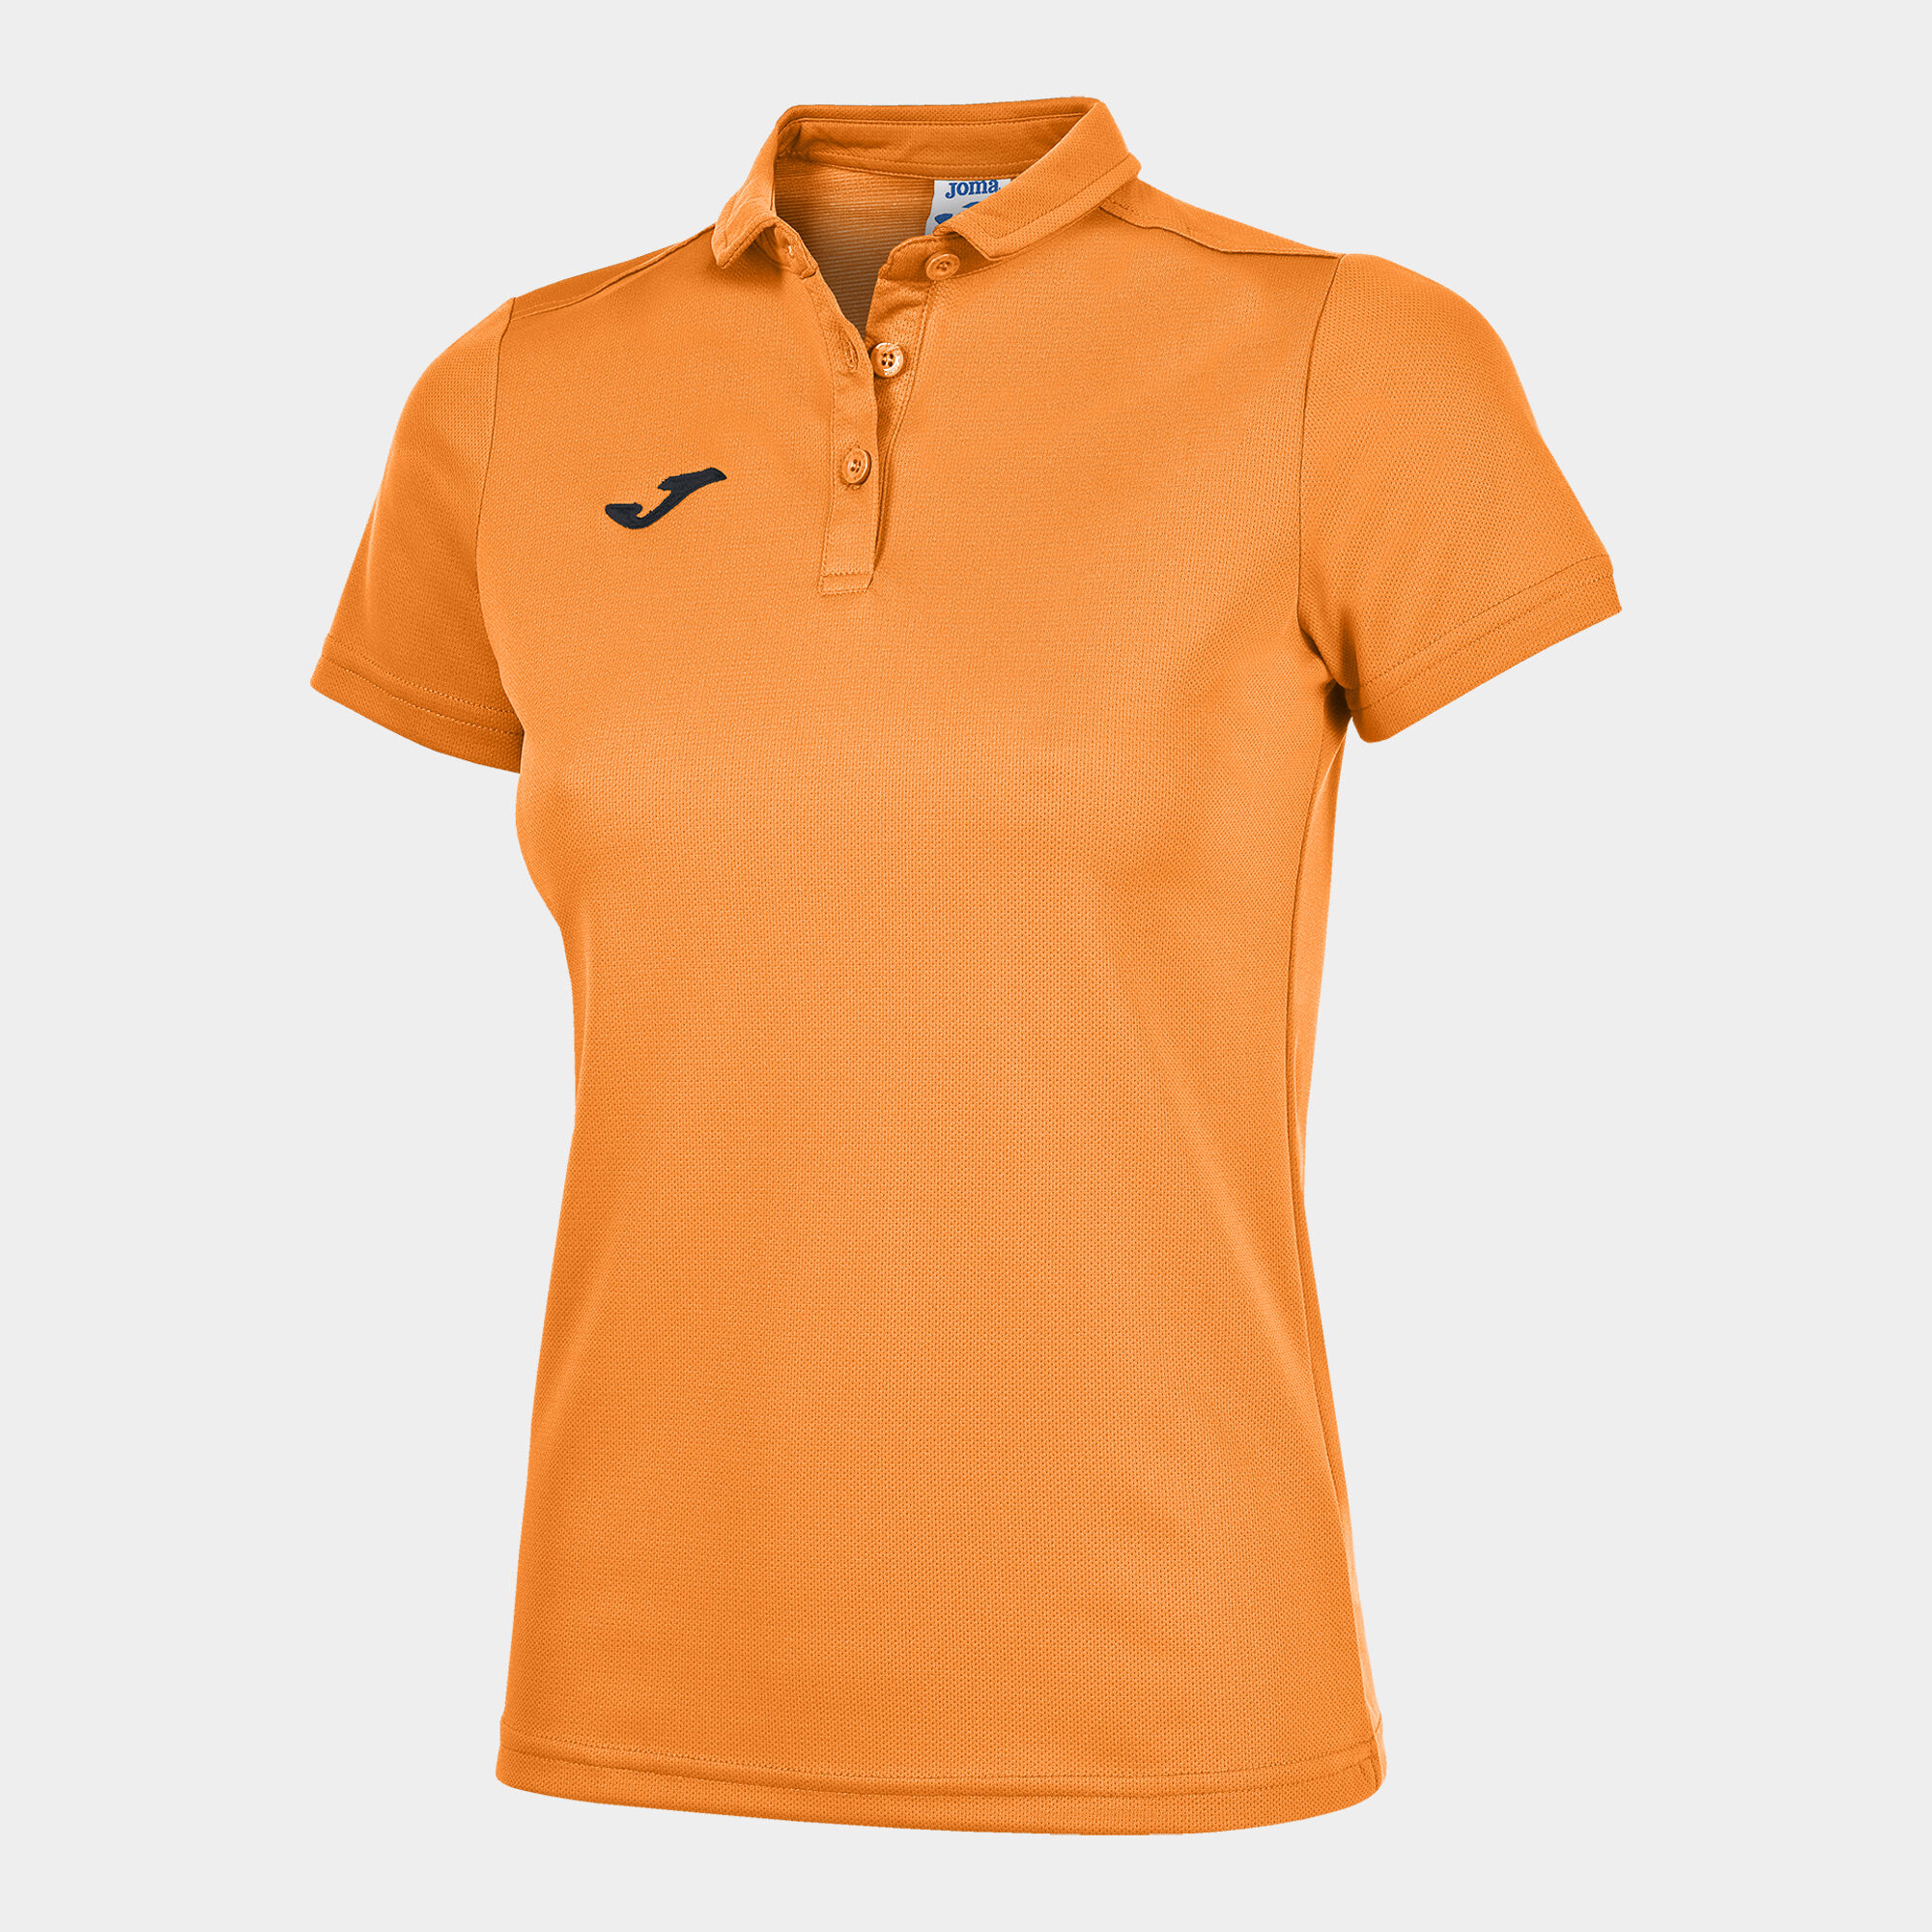 Polo shirt short-sleeve woman Hobby fluorescent orange